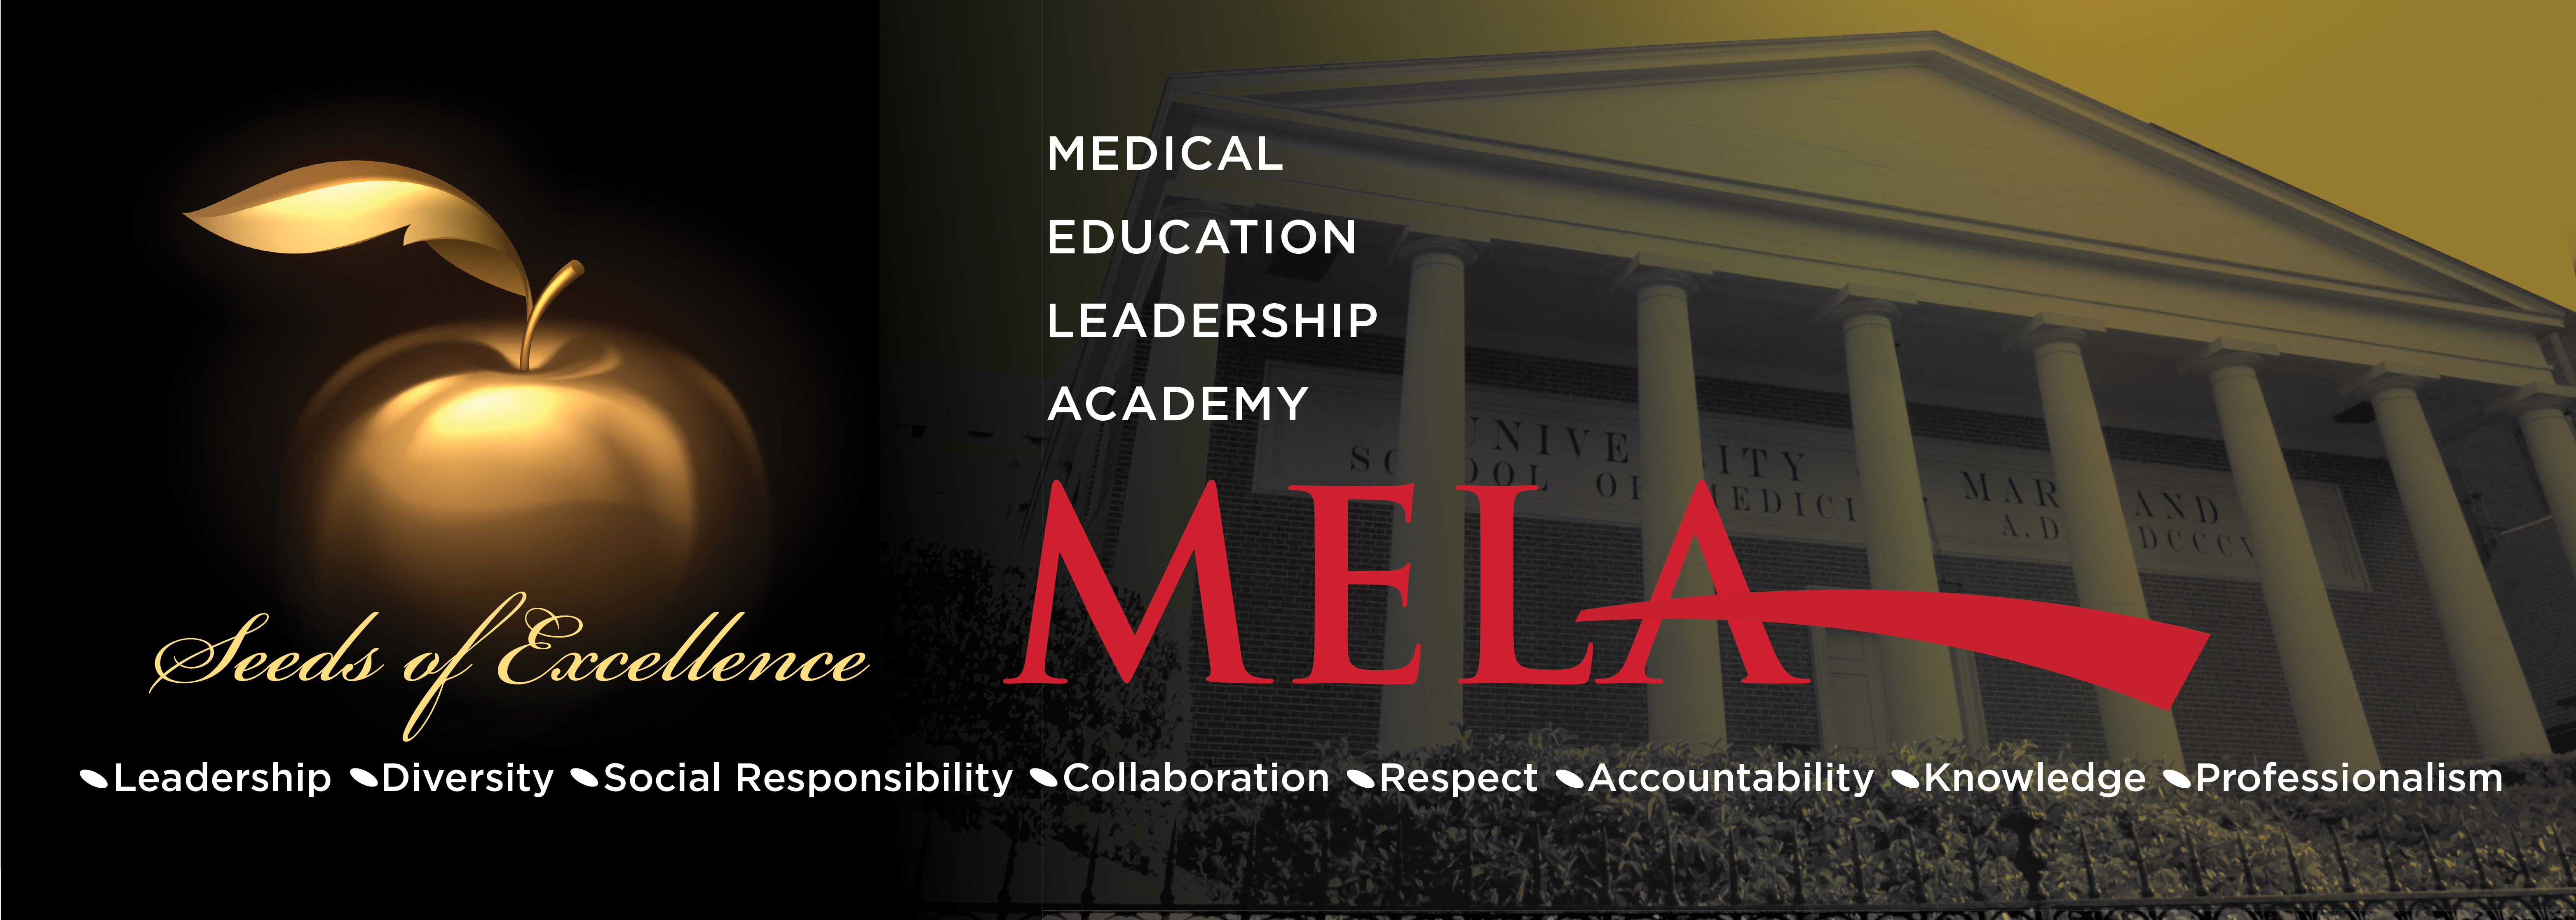 Medical Education Leadership Academy